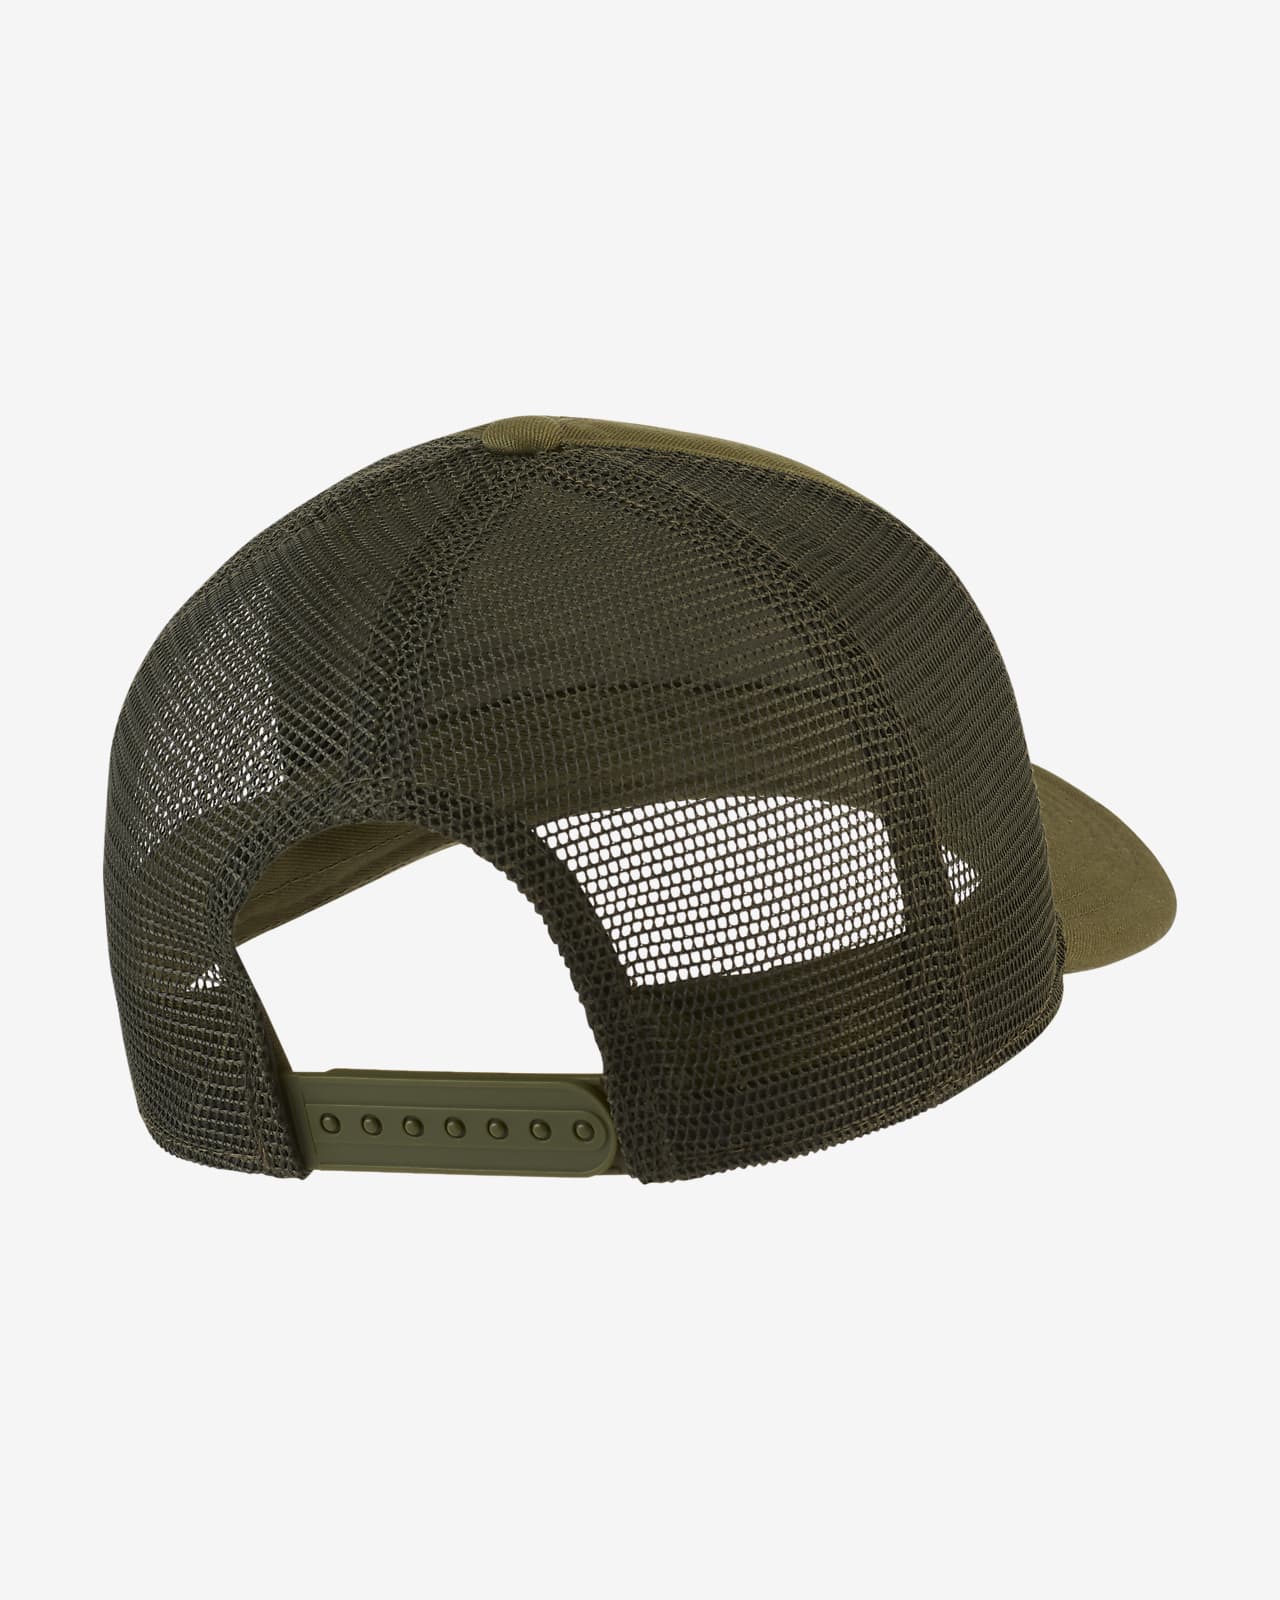 Nike Men's Casual Hat - Green